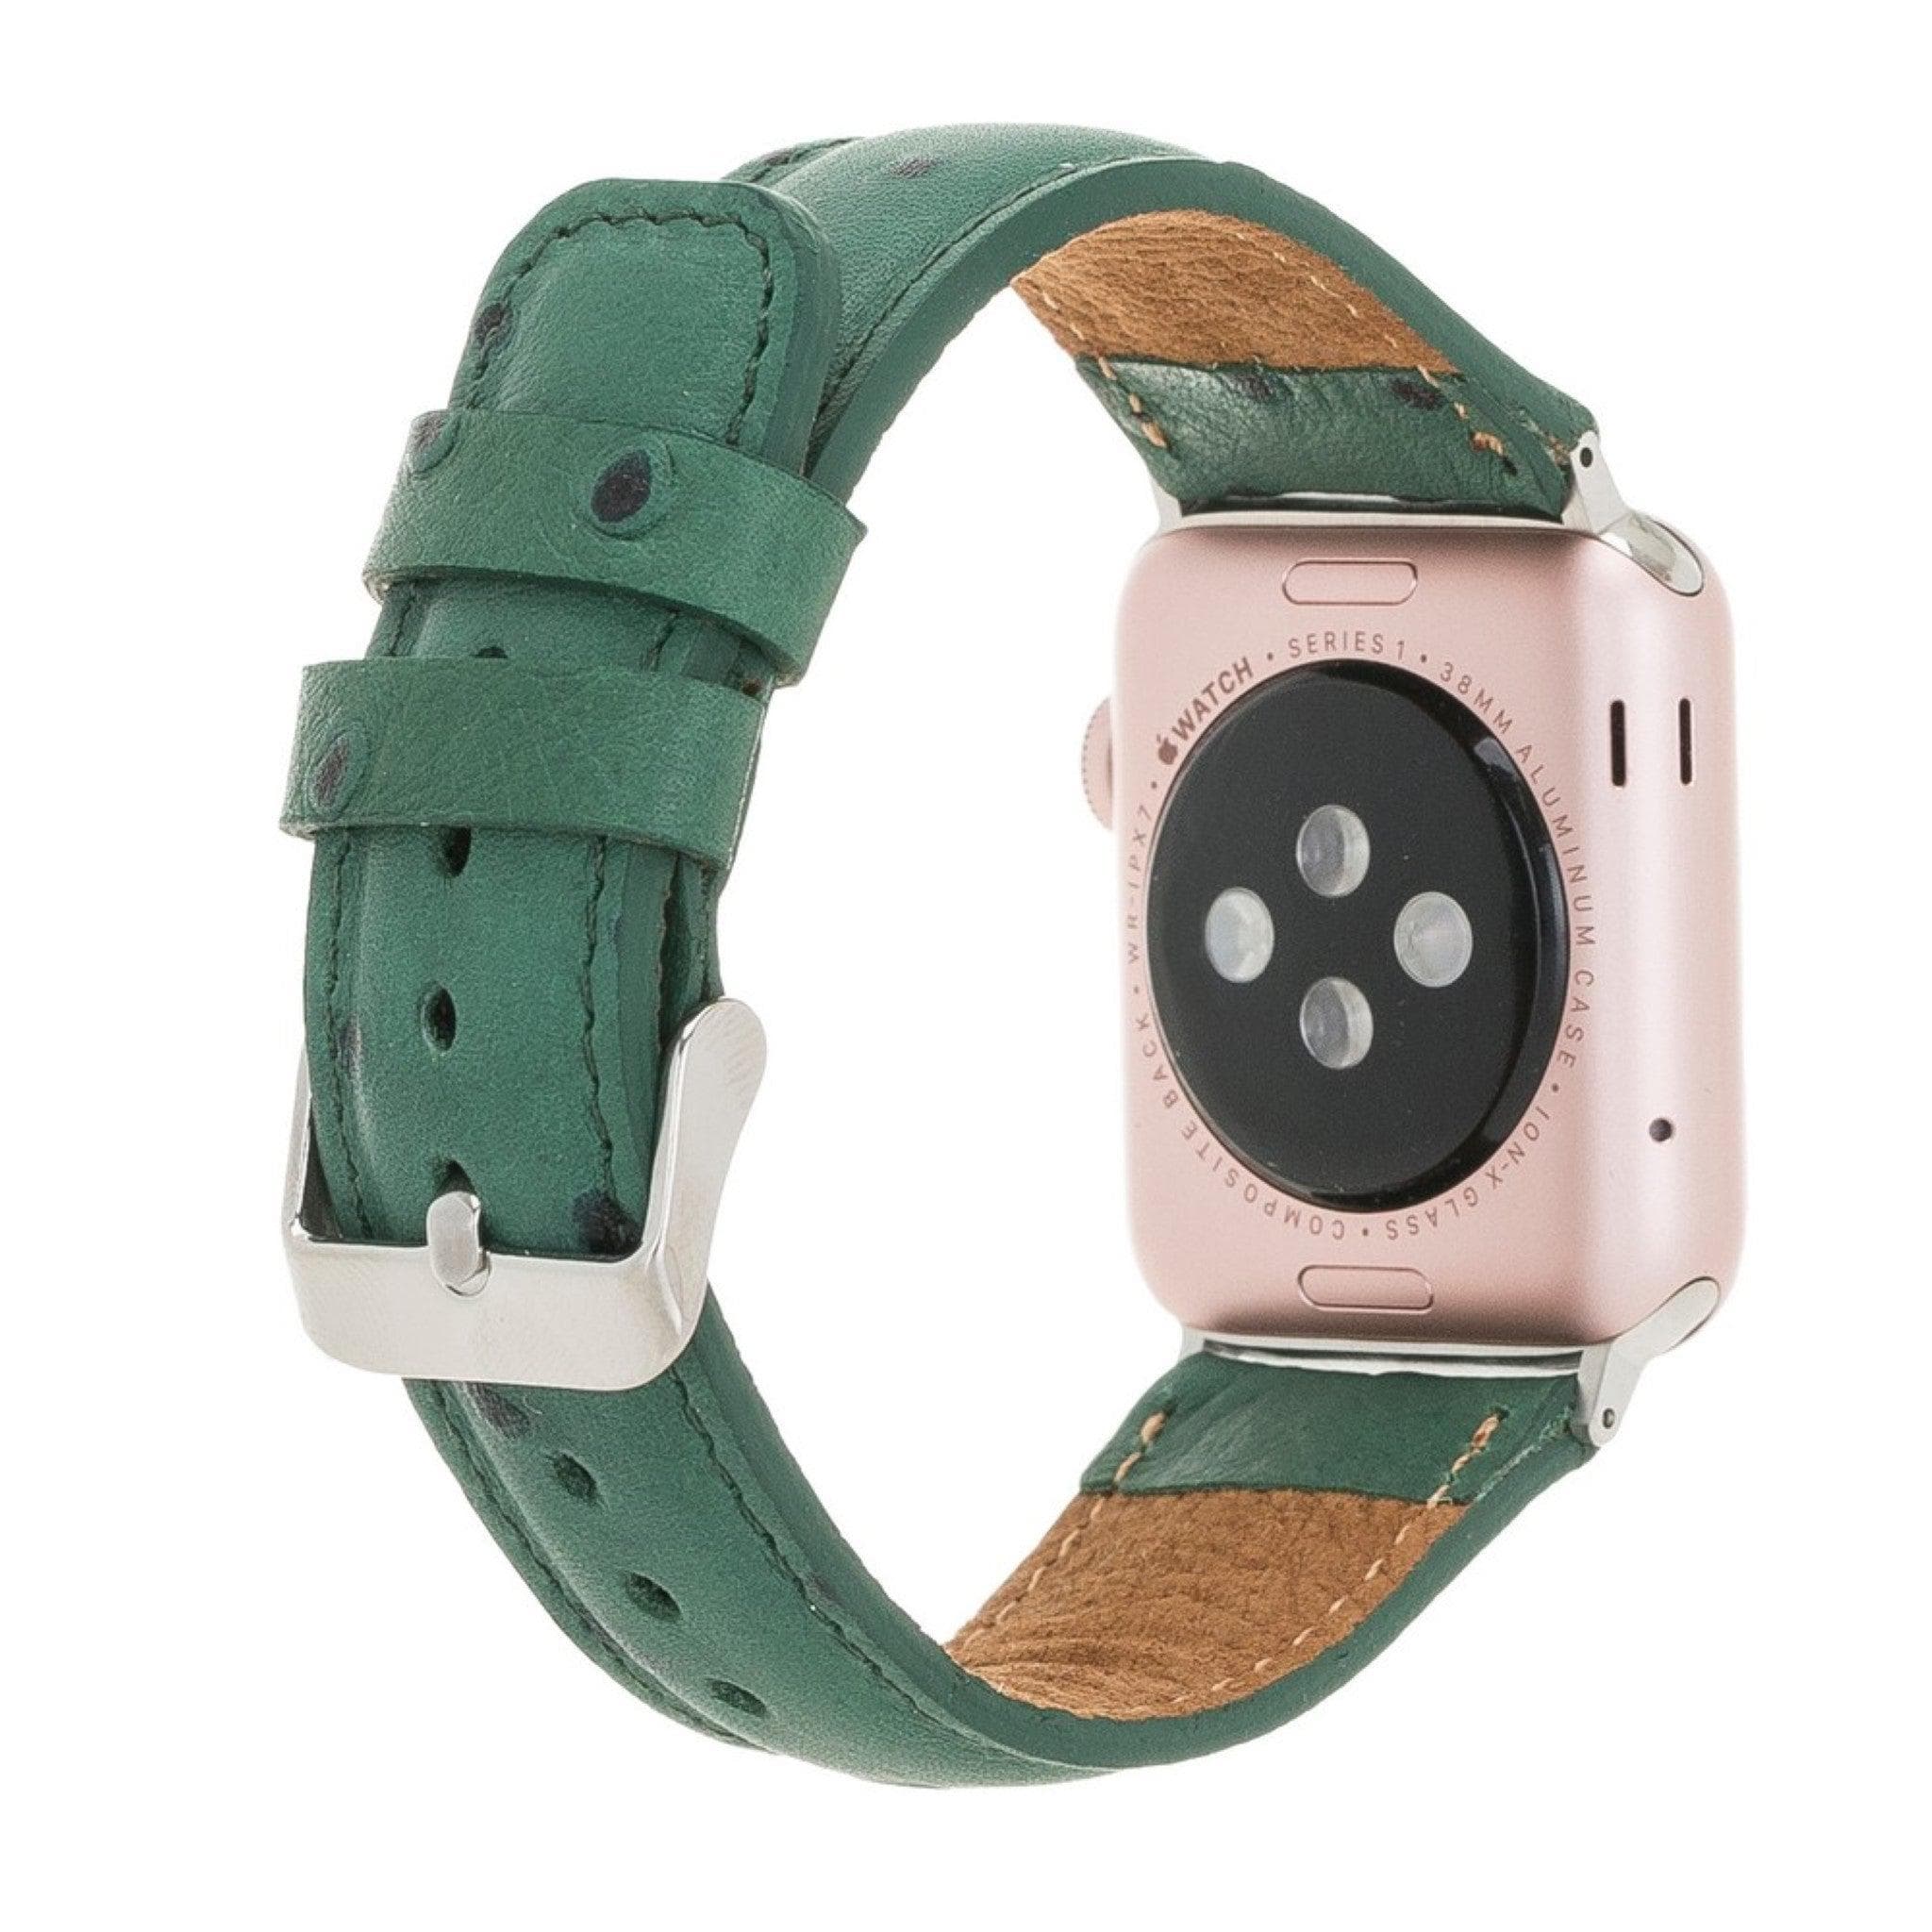 Cardiff Classic Apple Watch Leather Straps Bouletta LTD